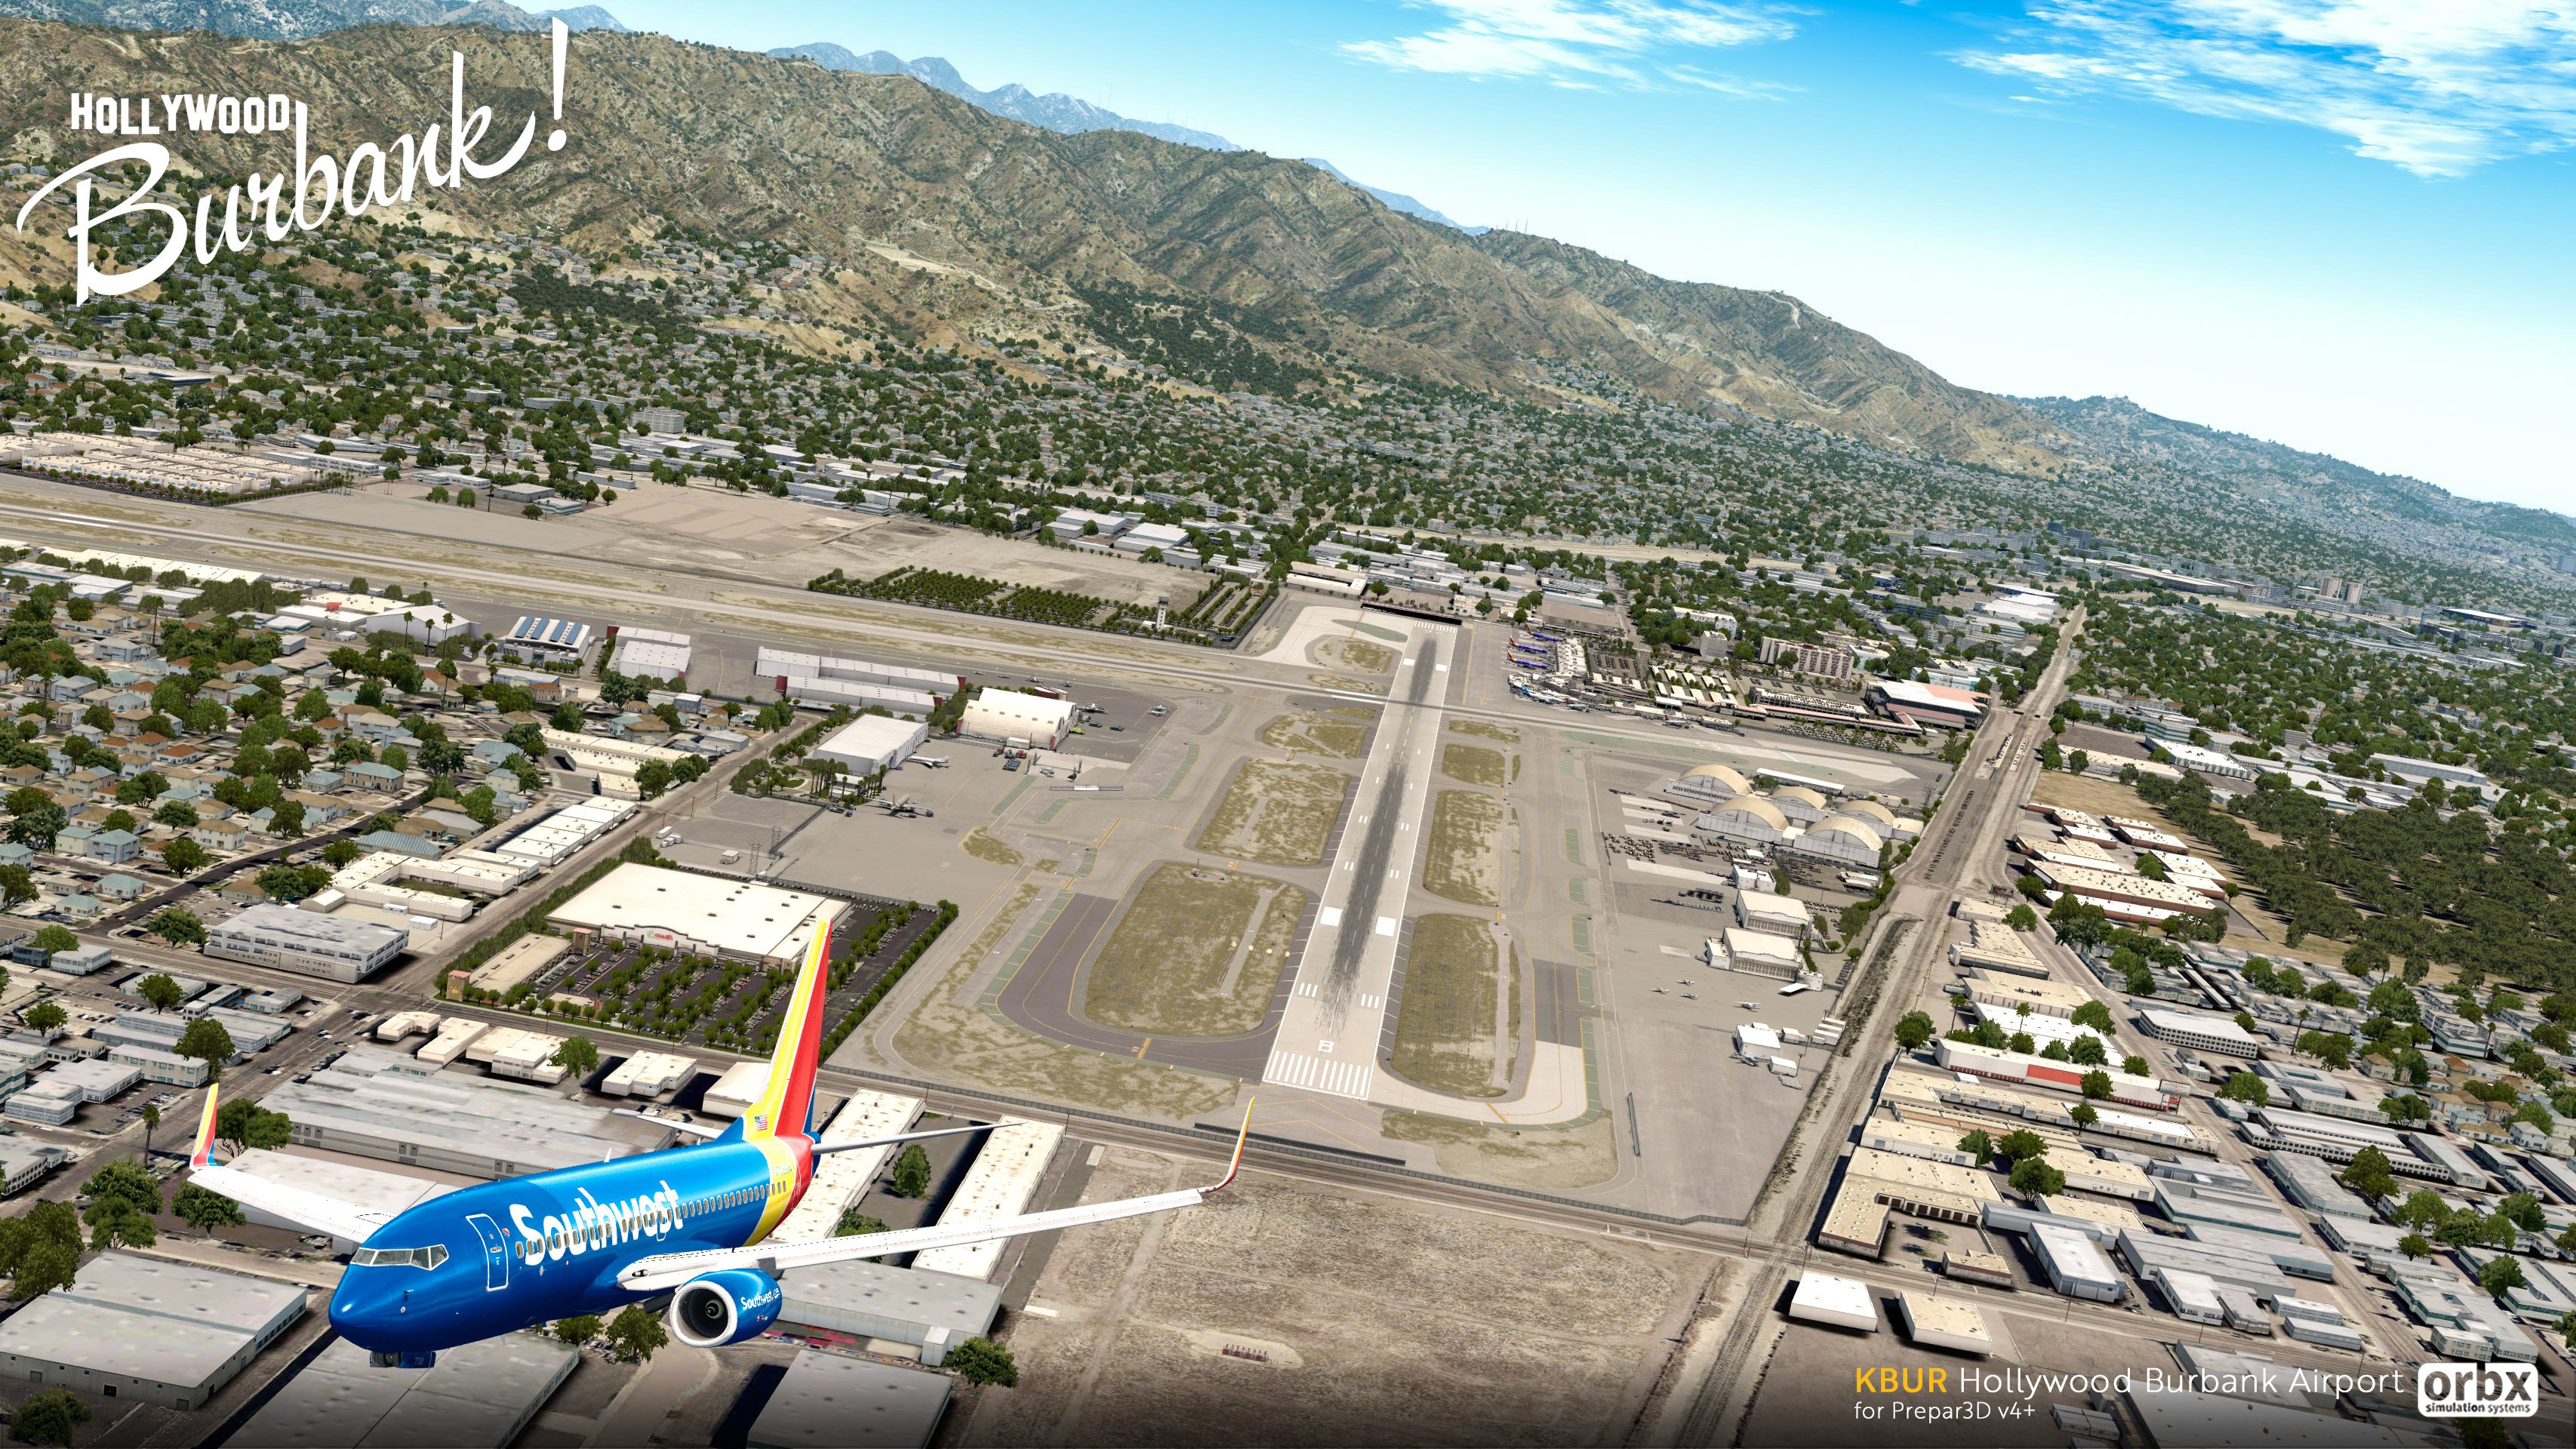 Orbx Previews Burbank Airport (KBUR) and CityScene for Prepar3D